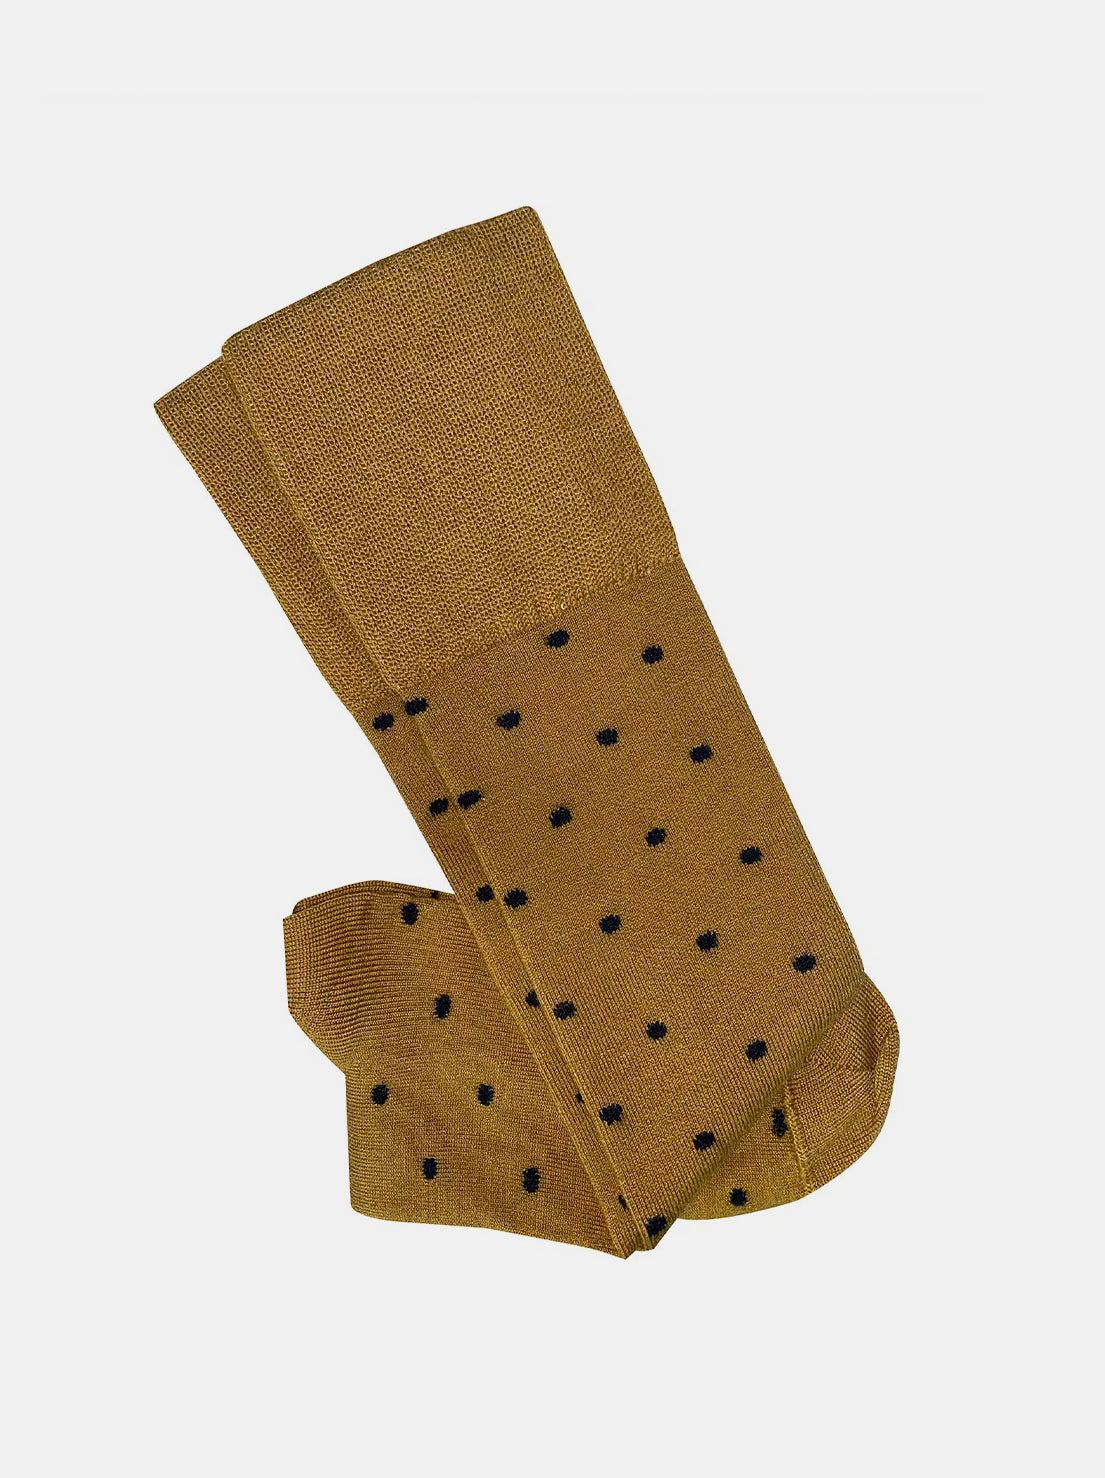 Tightology - Dotty Wool Socks - Mustard / Black